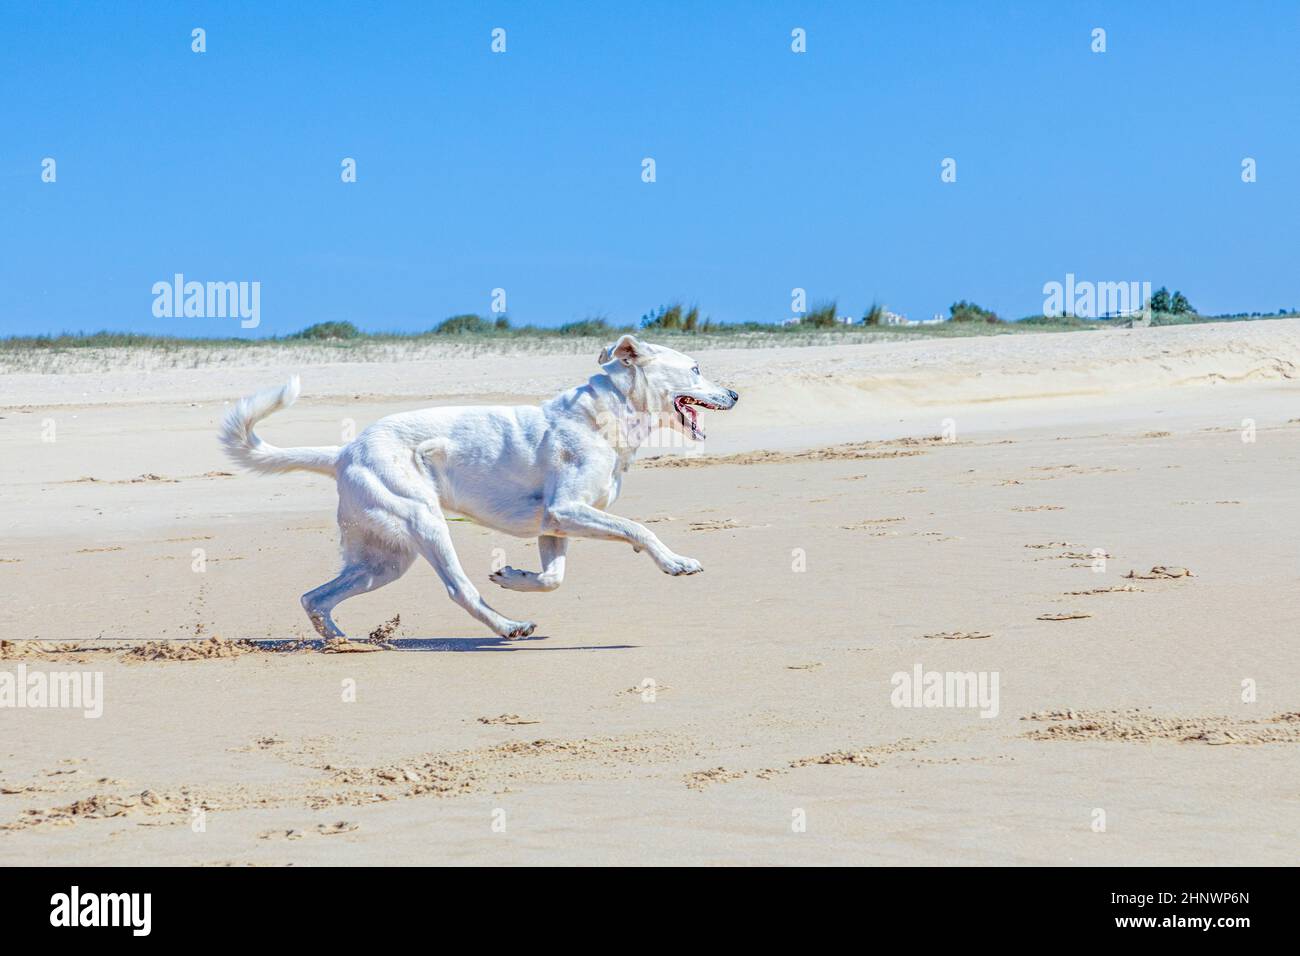 brown Estrela mountain dog runs at the closed beach under clear sky  due to Corona shutdown Stock Photo